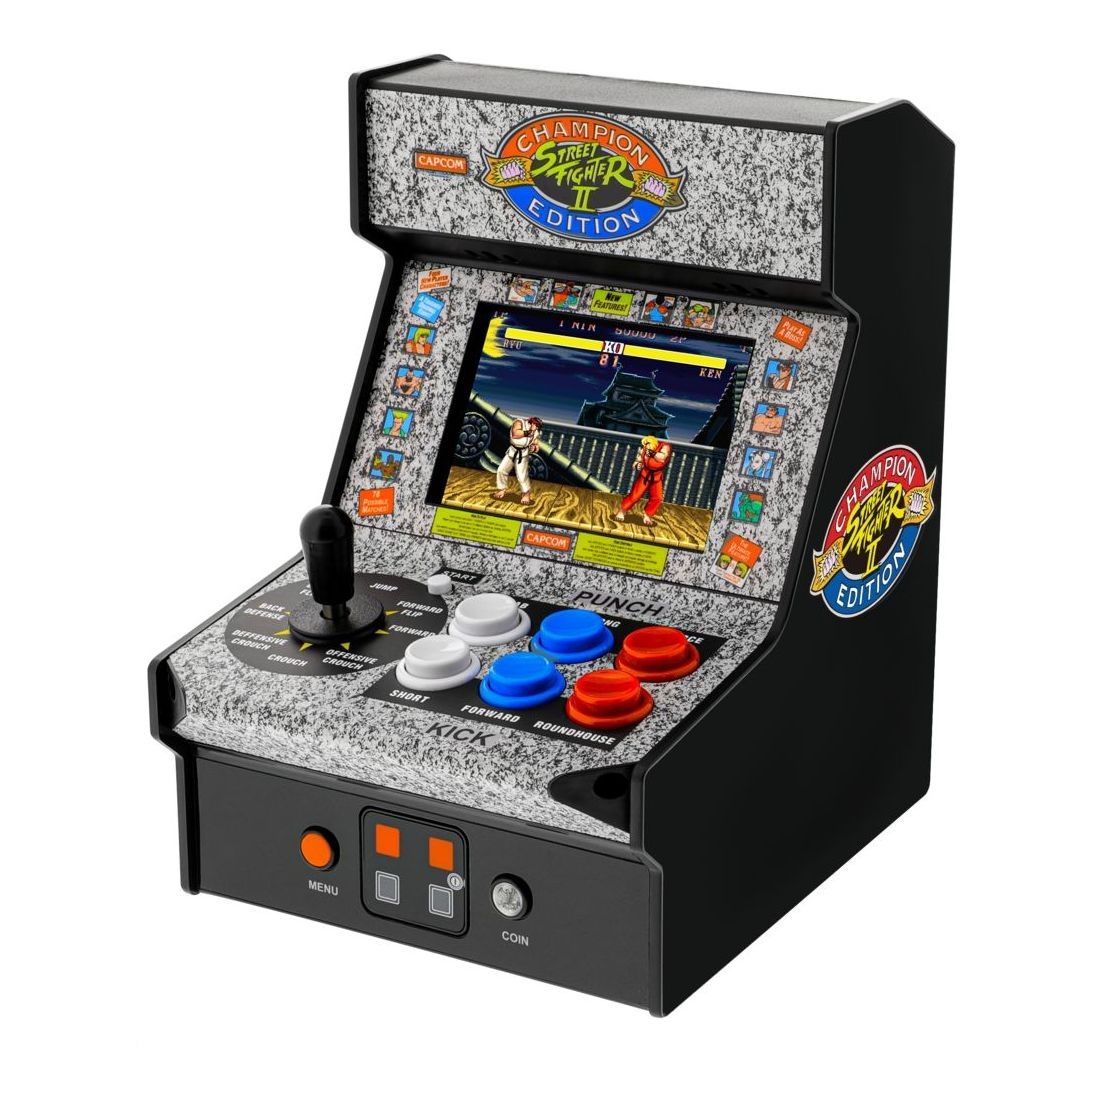 My Arcade Street Fighter 2 Champion Edition Micro Player Arcade (7.5-inch)